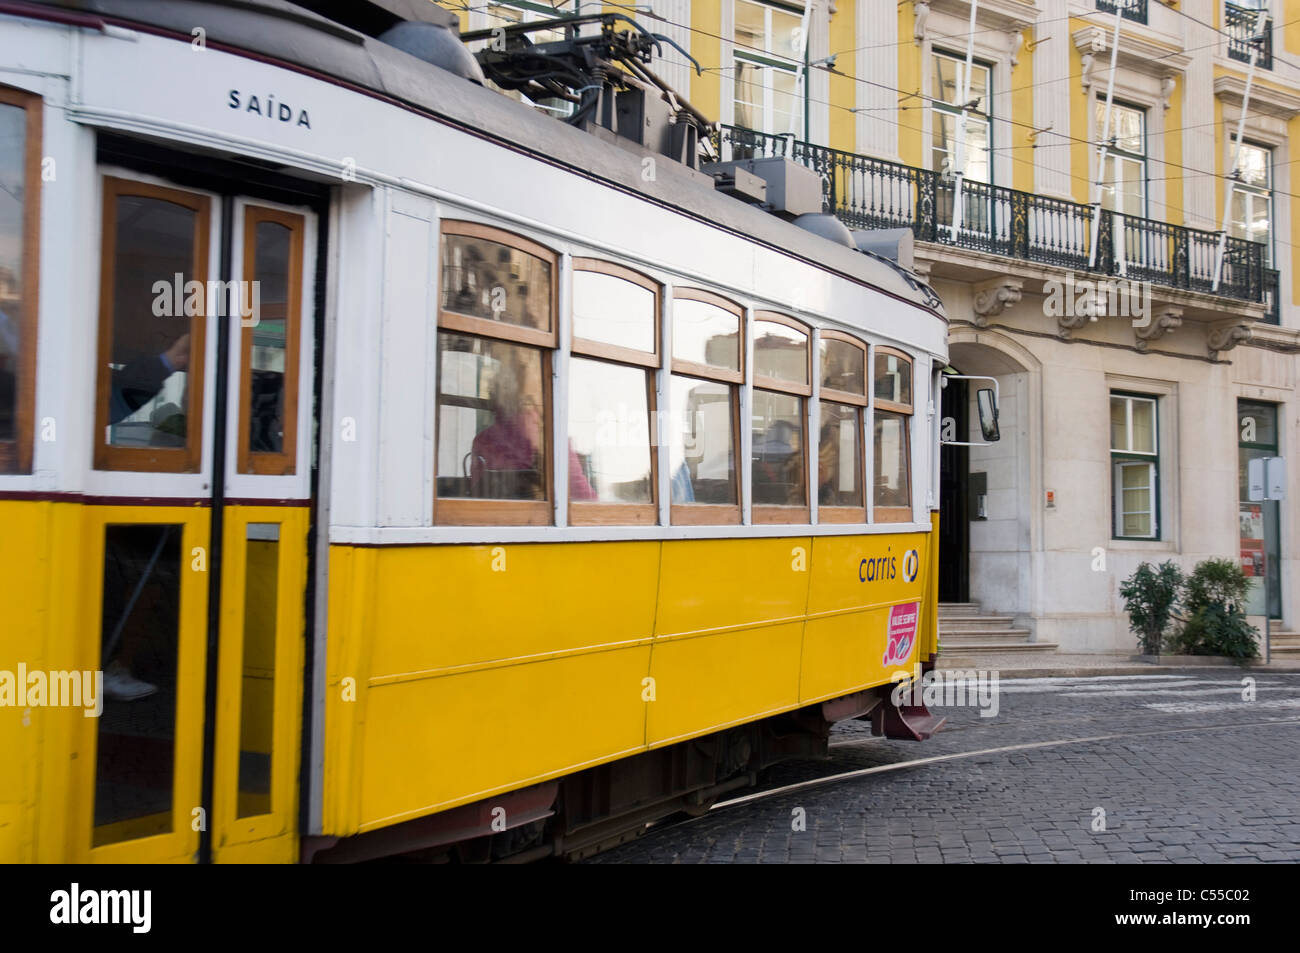 Yellow tram on the street, Lisbon, Portugal Stock Photo